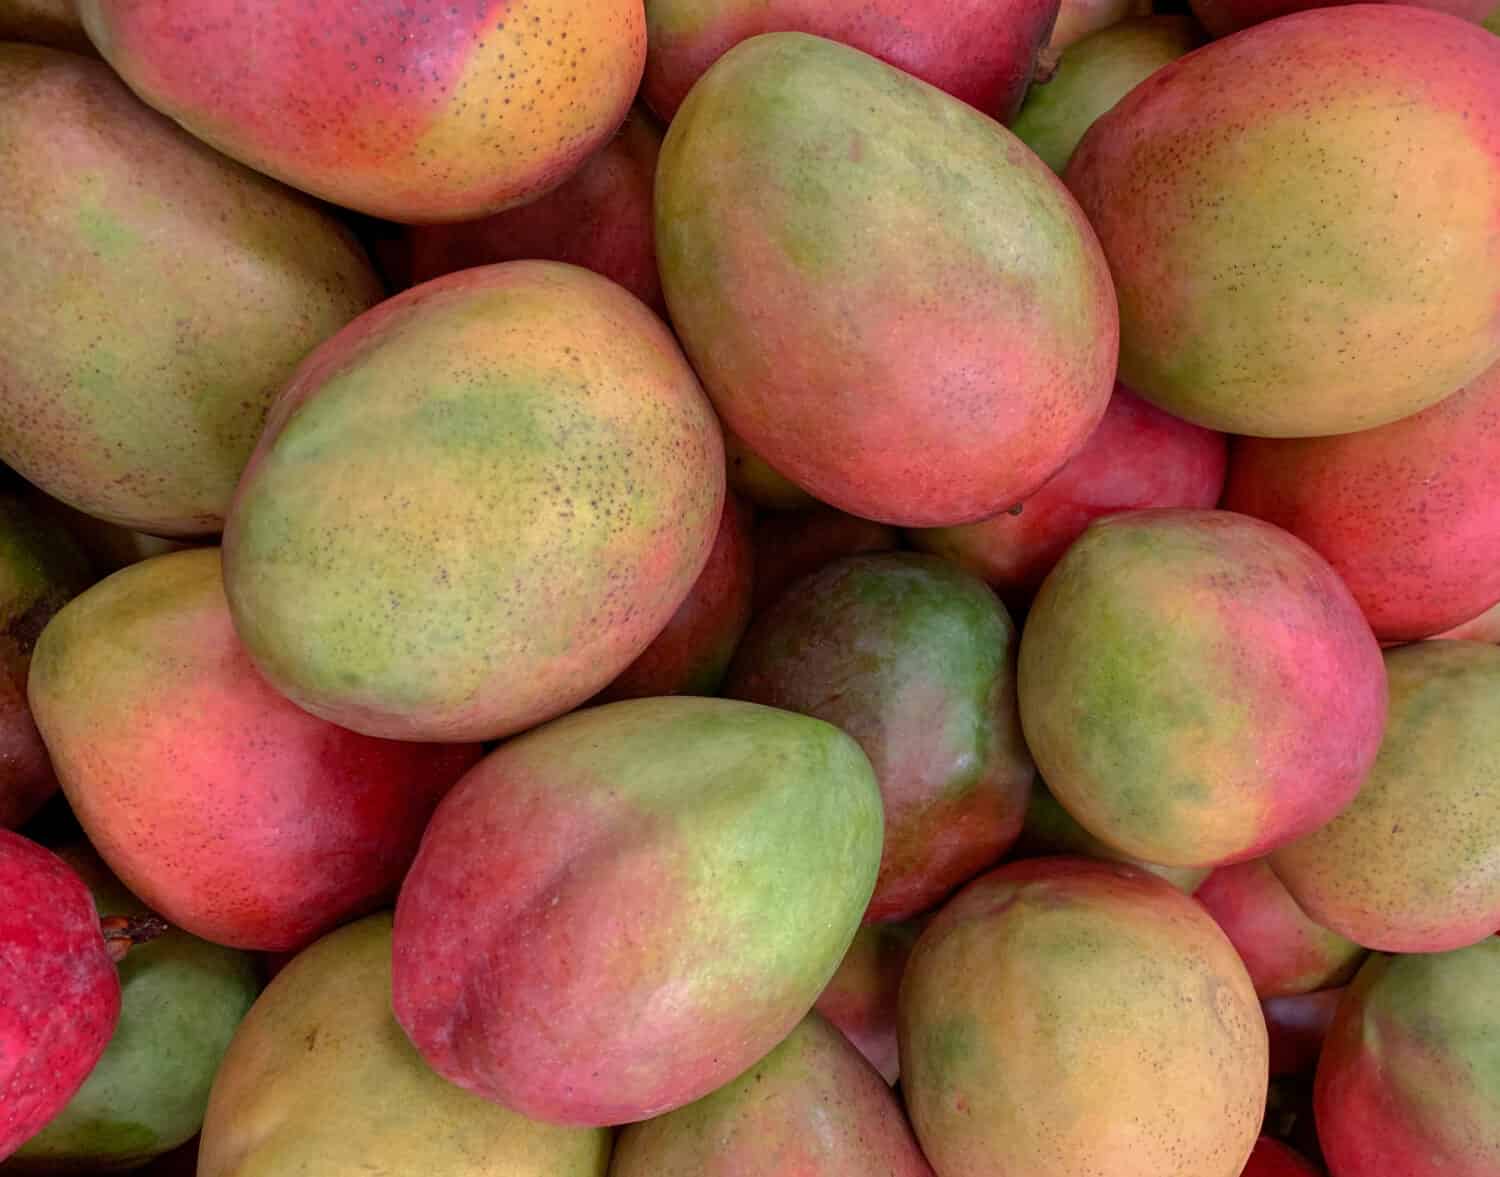 Atkins mangos on a supermarket display. 